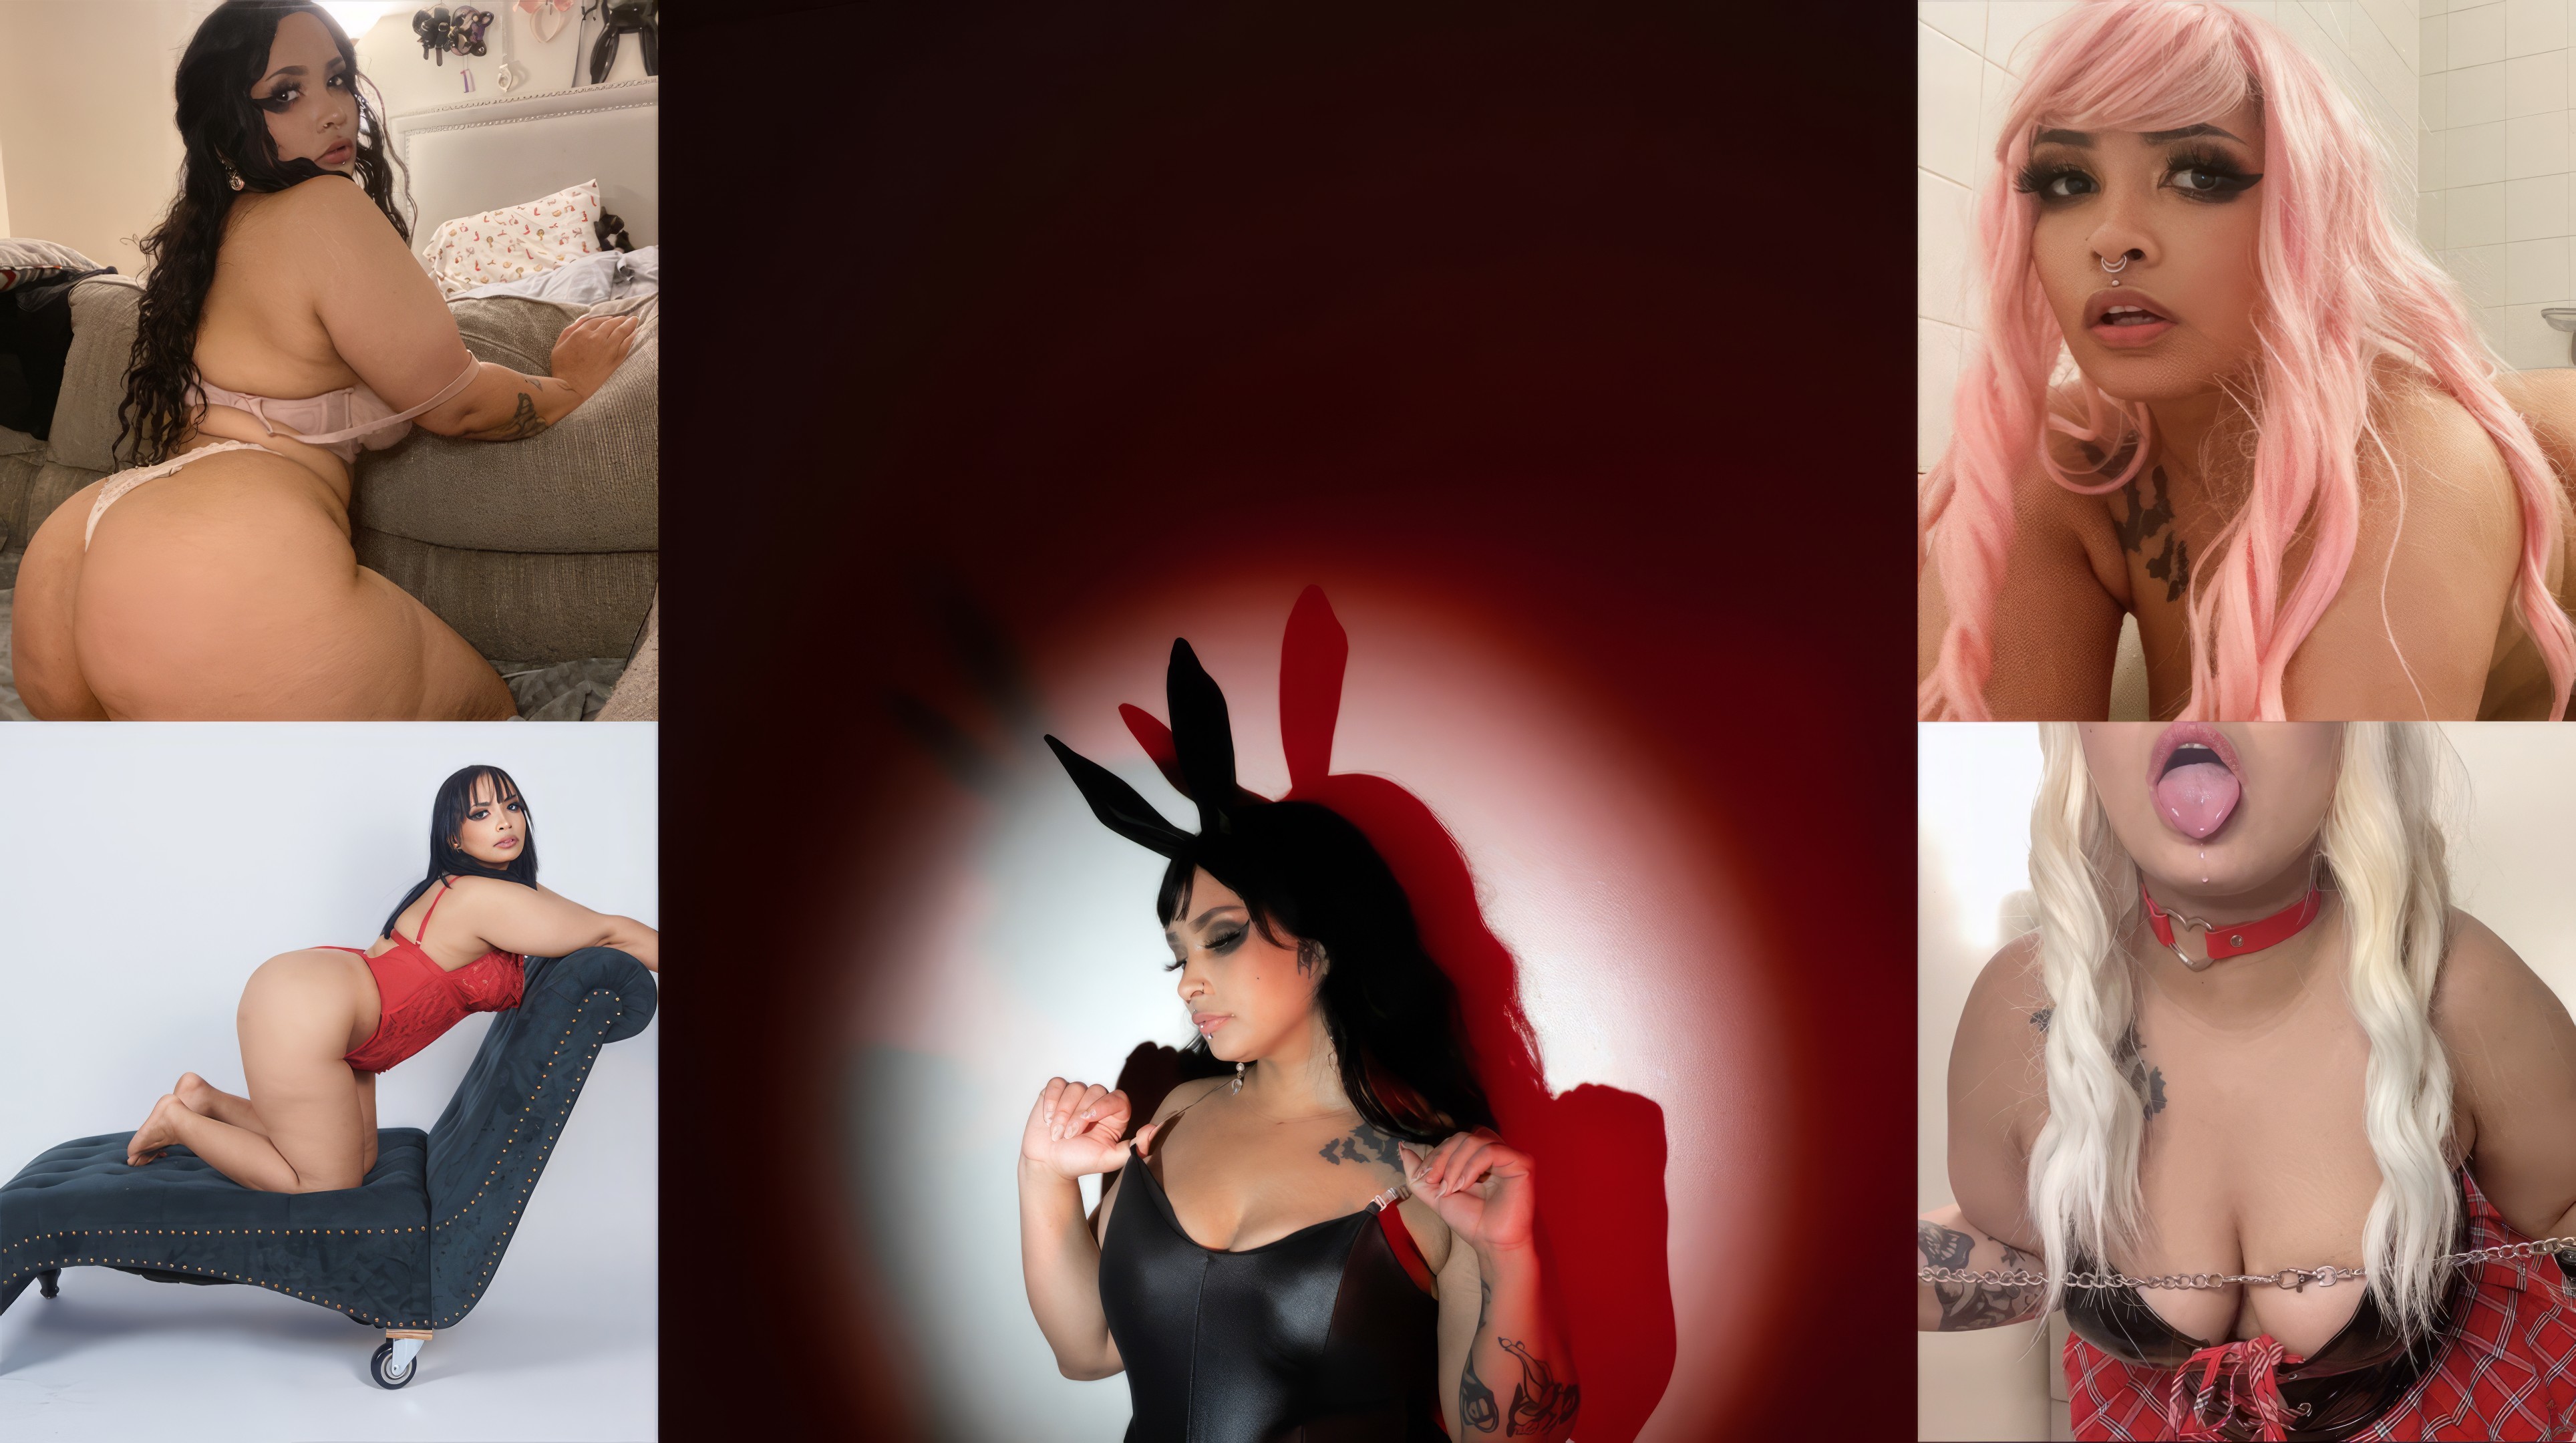 [Onlyfans.com] SunnyBunnyyyy Video Pack (391 ) (PuffyBunniee) [2023, Amateur, Anal, BBW, Big Ass, Big Tits, Blowjob, Creampie, Dildo, Facial, Hardcore, Latex, Lingerie, Latina, Lesbian, Masturbation, Natural Tits, Posing, Softcore, Solo, Titfuck